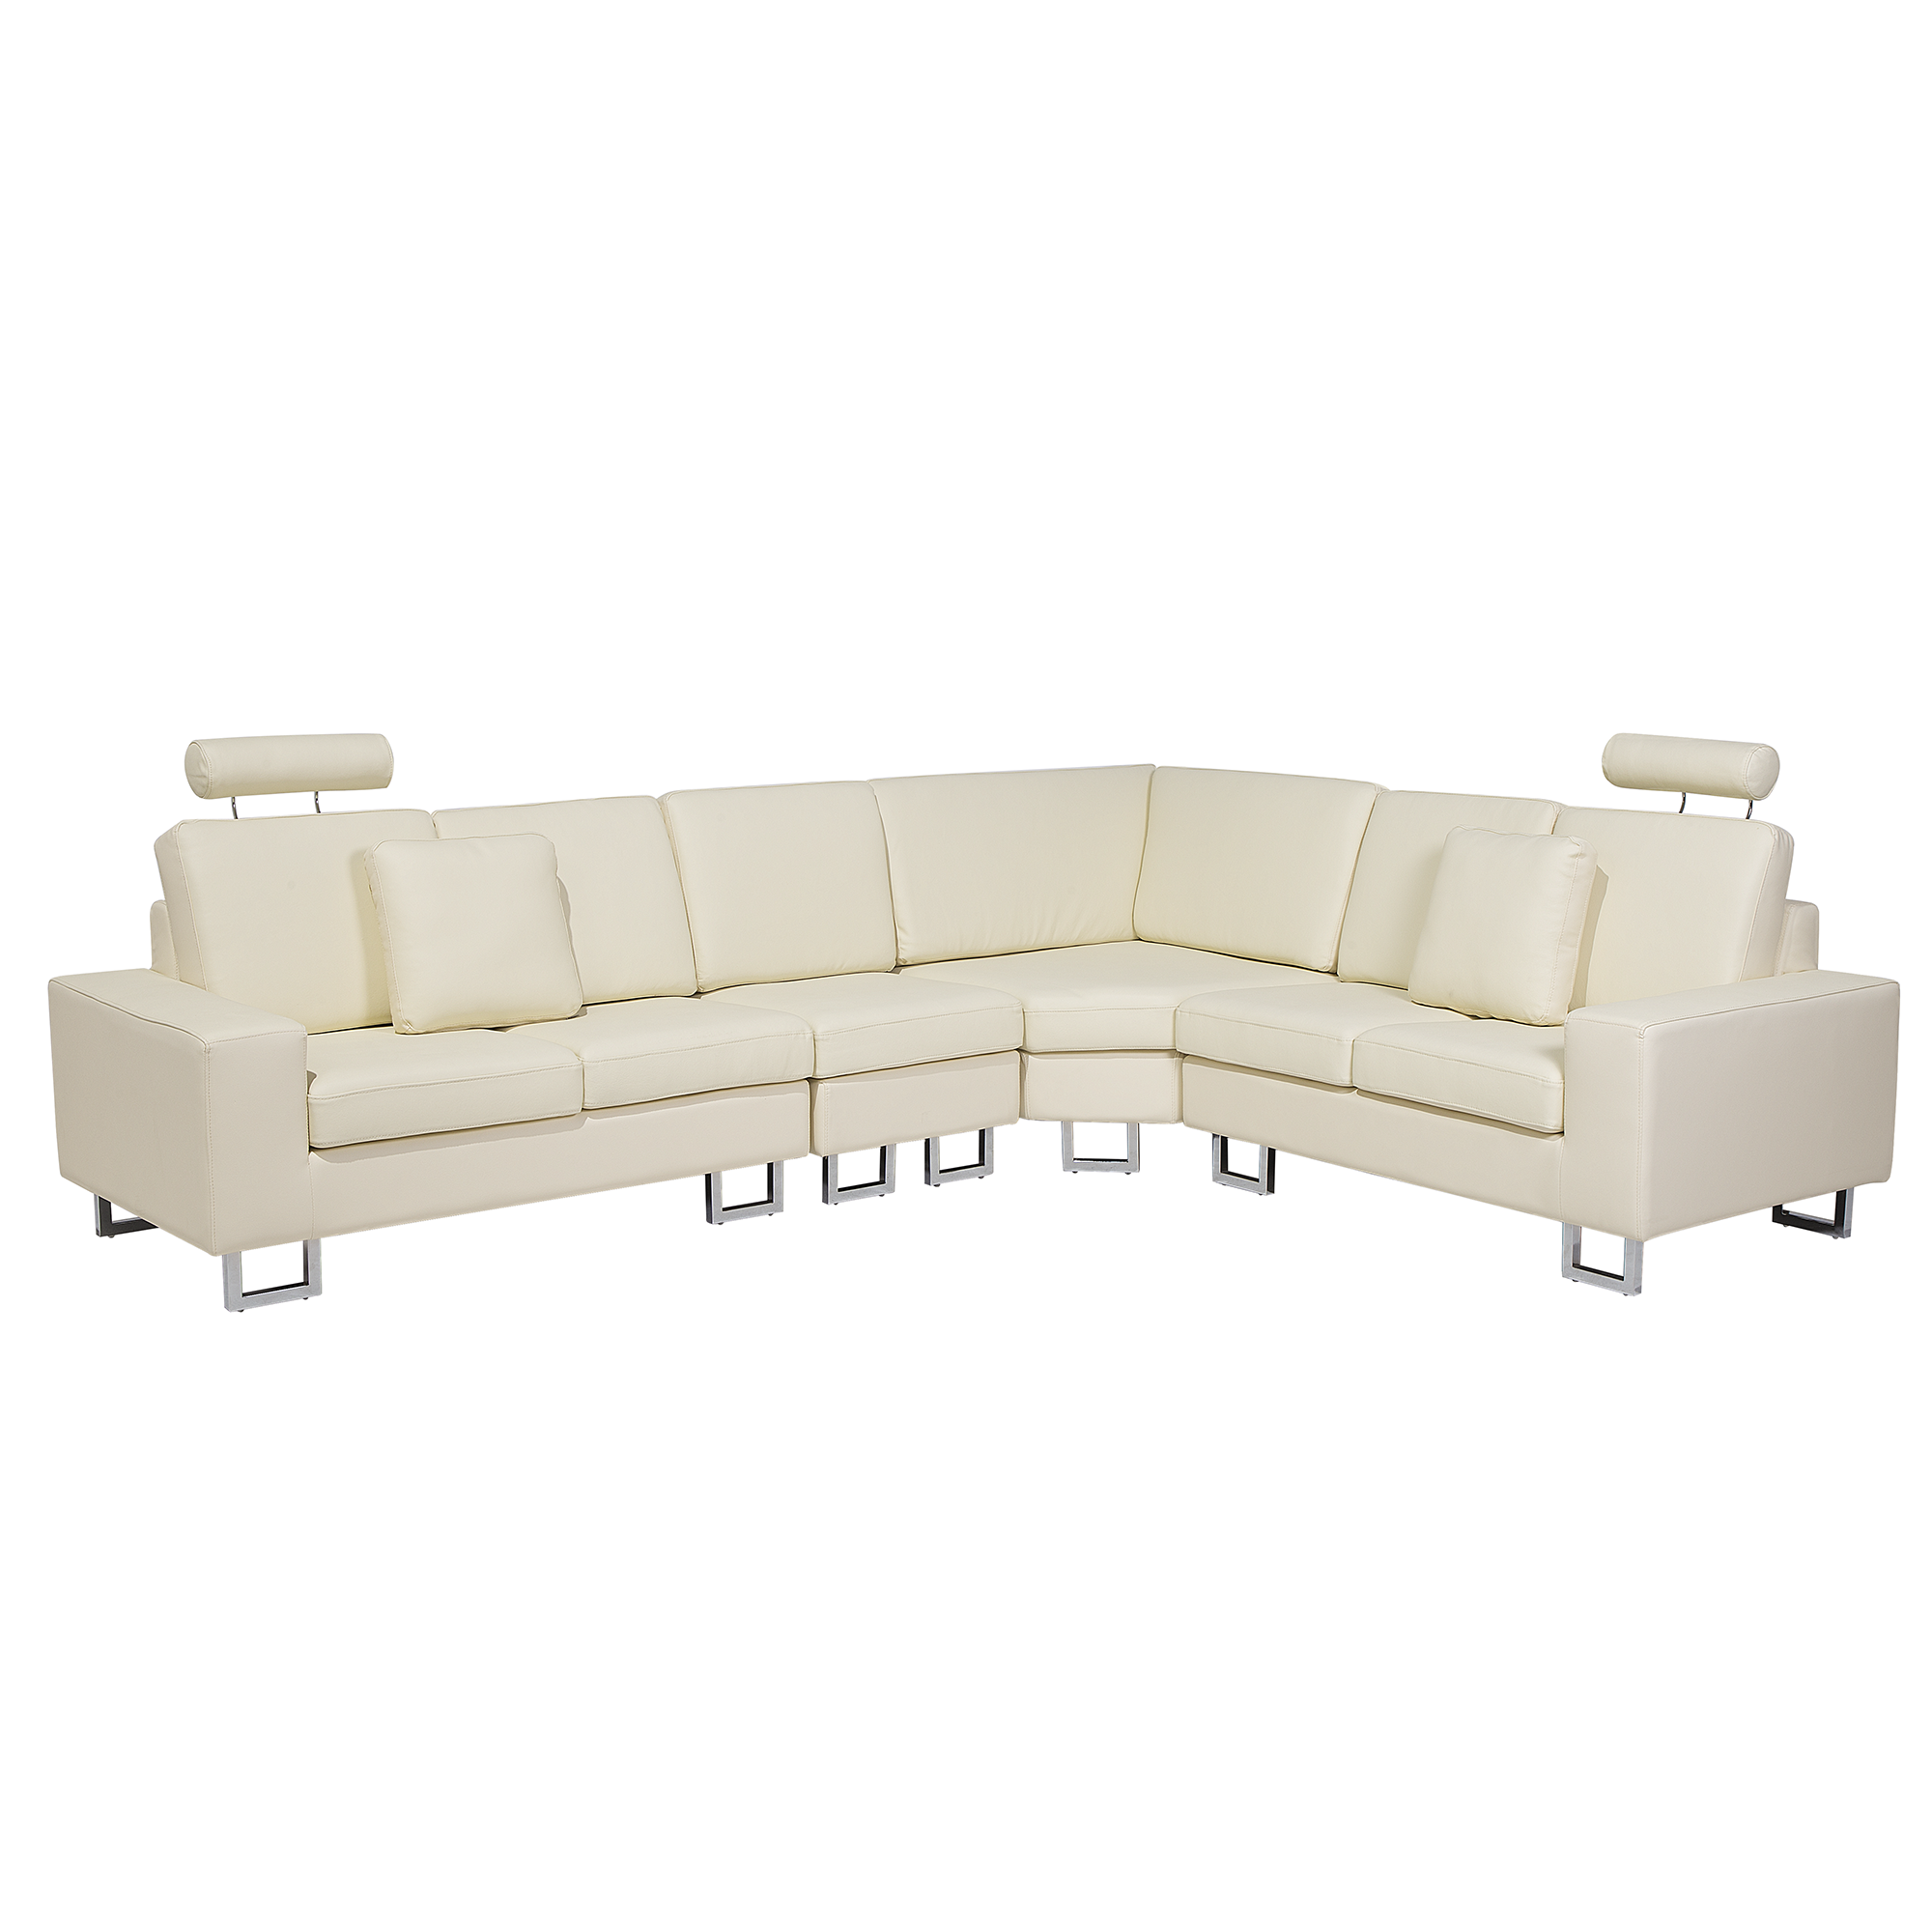 Beliani Corner Sofa Beige Leather Upholstery Left Hand Orientation with Adjustable Headrests